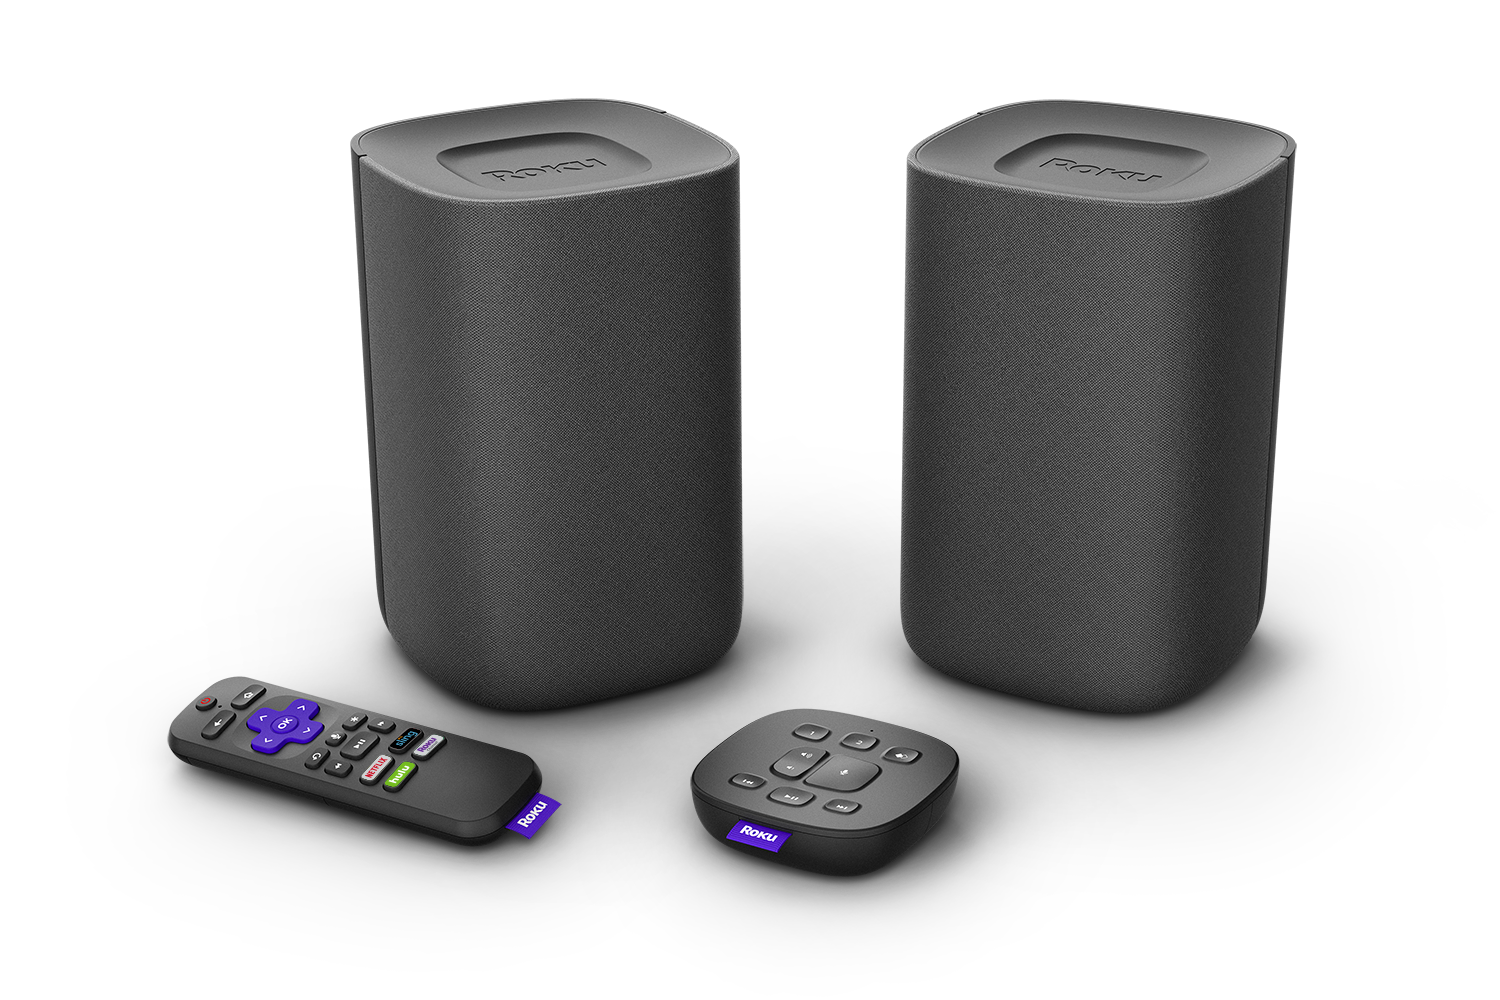 Roku's new stereo speakers are positioned as a soundbar alternative